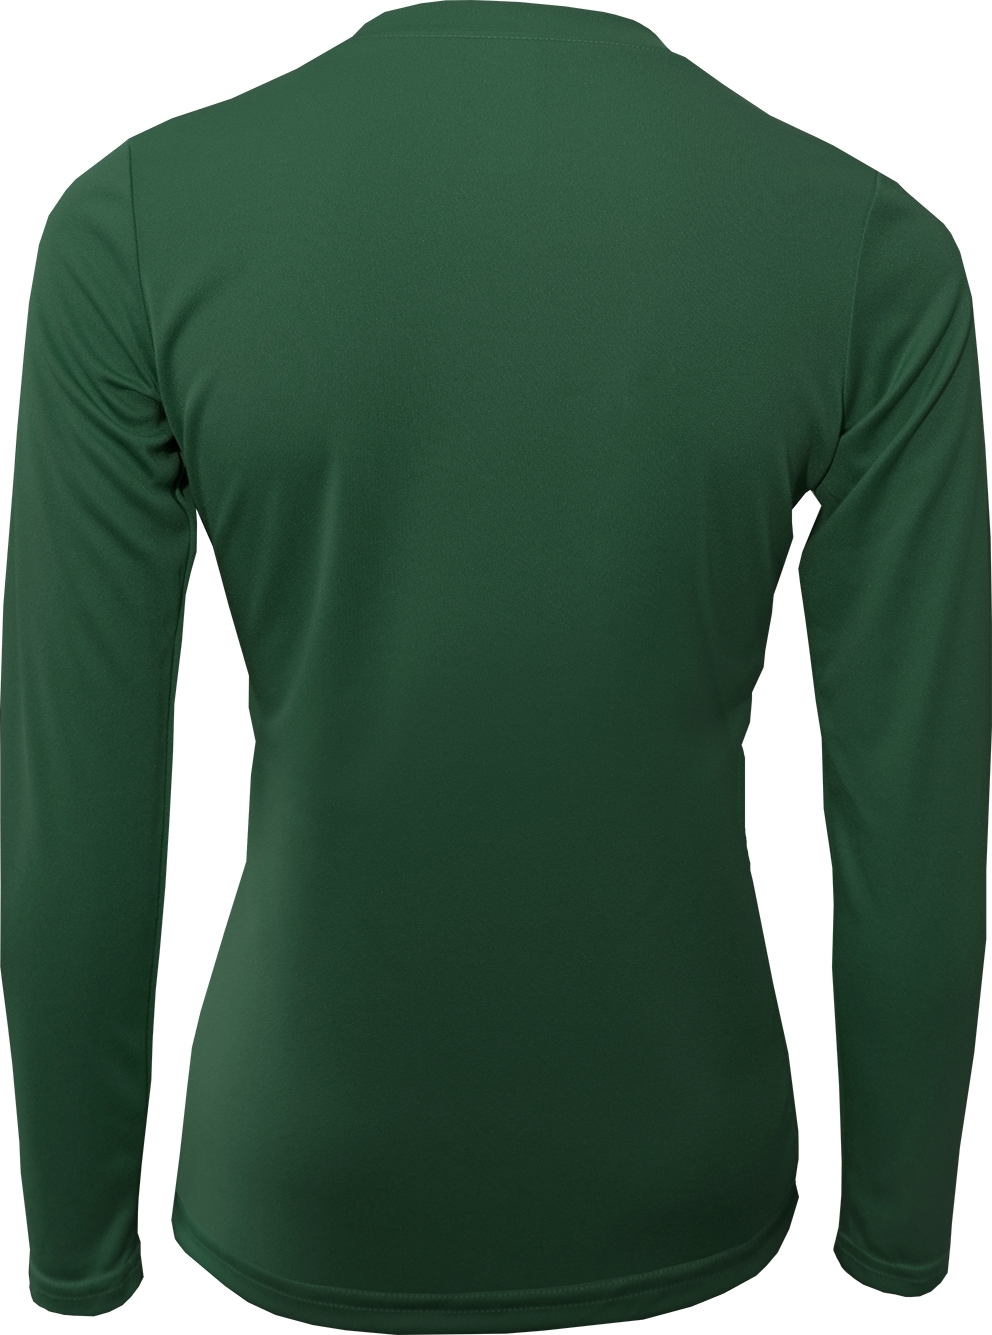 BAW Athletic Wear DT87 - Ladies Long Sleeve Dry-Tek V-Neck T-Shirt $11.20 -  T-Shirts